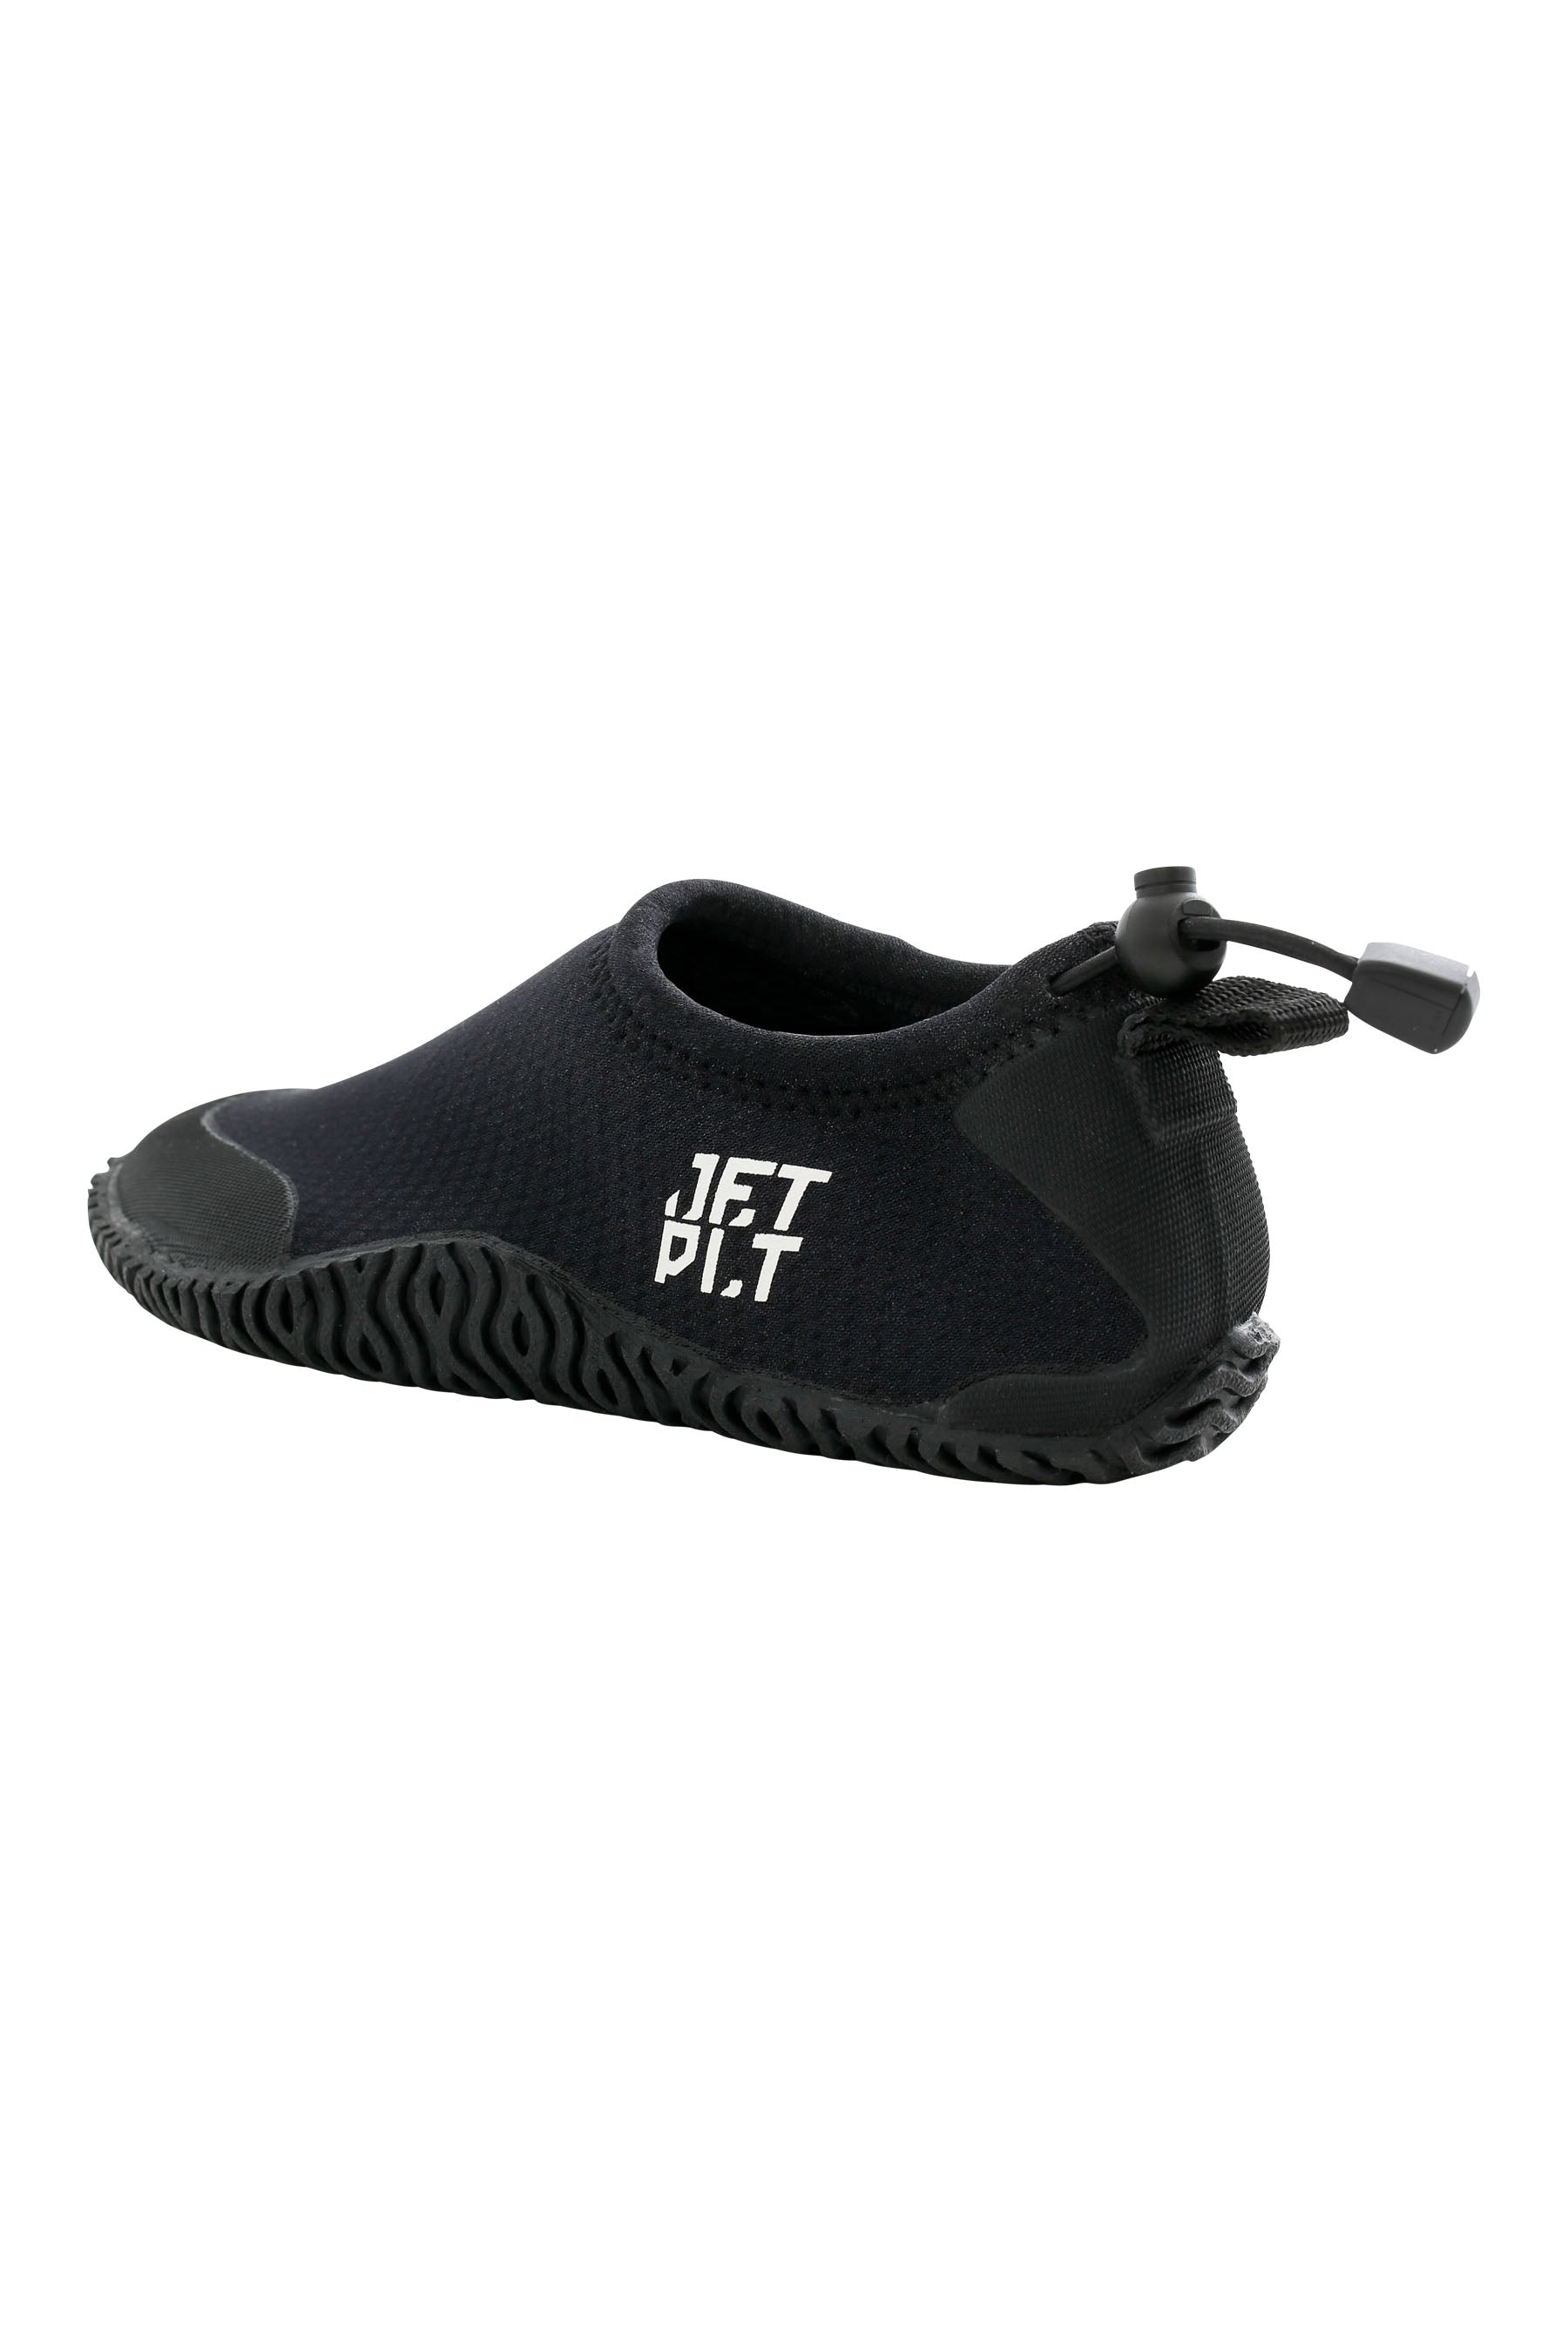 Jetpilot Hydro Shoe Black 3